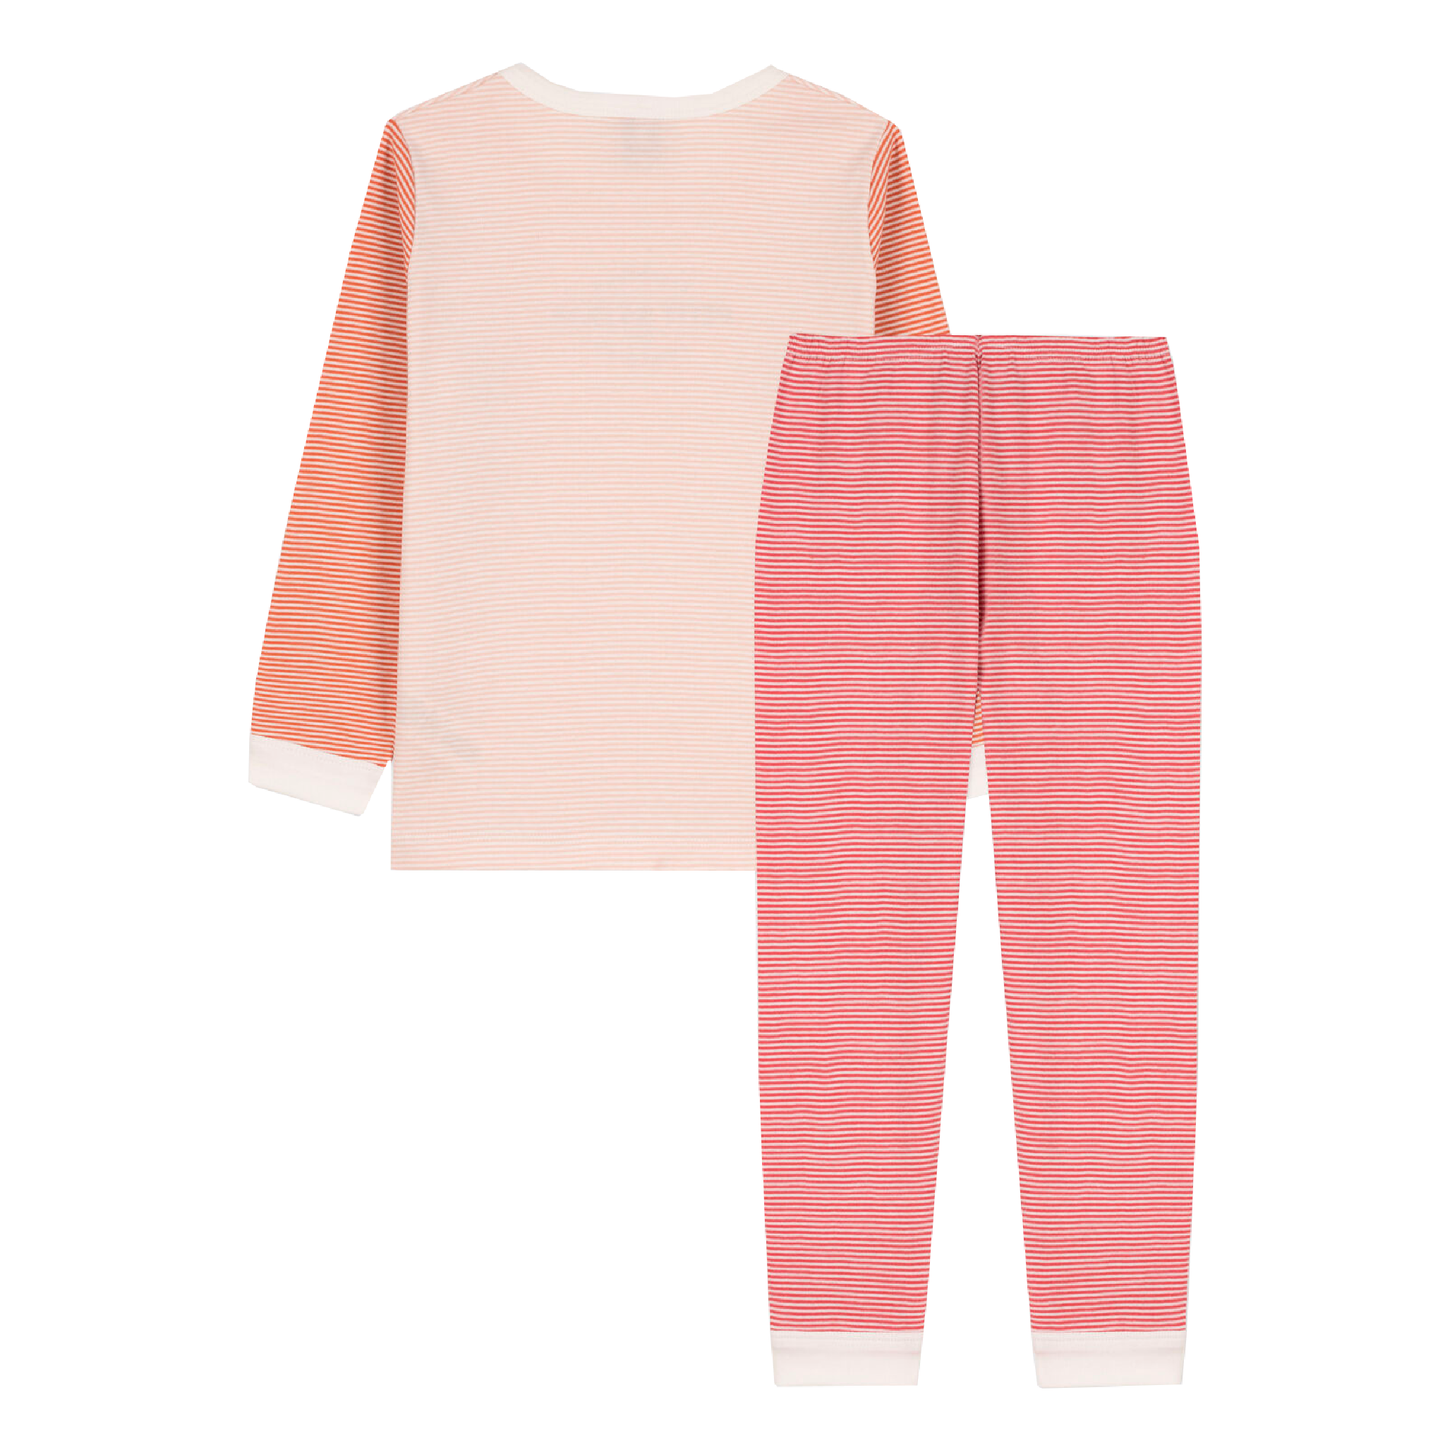 Nightwear, Pinstriped Pink